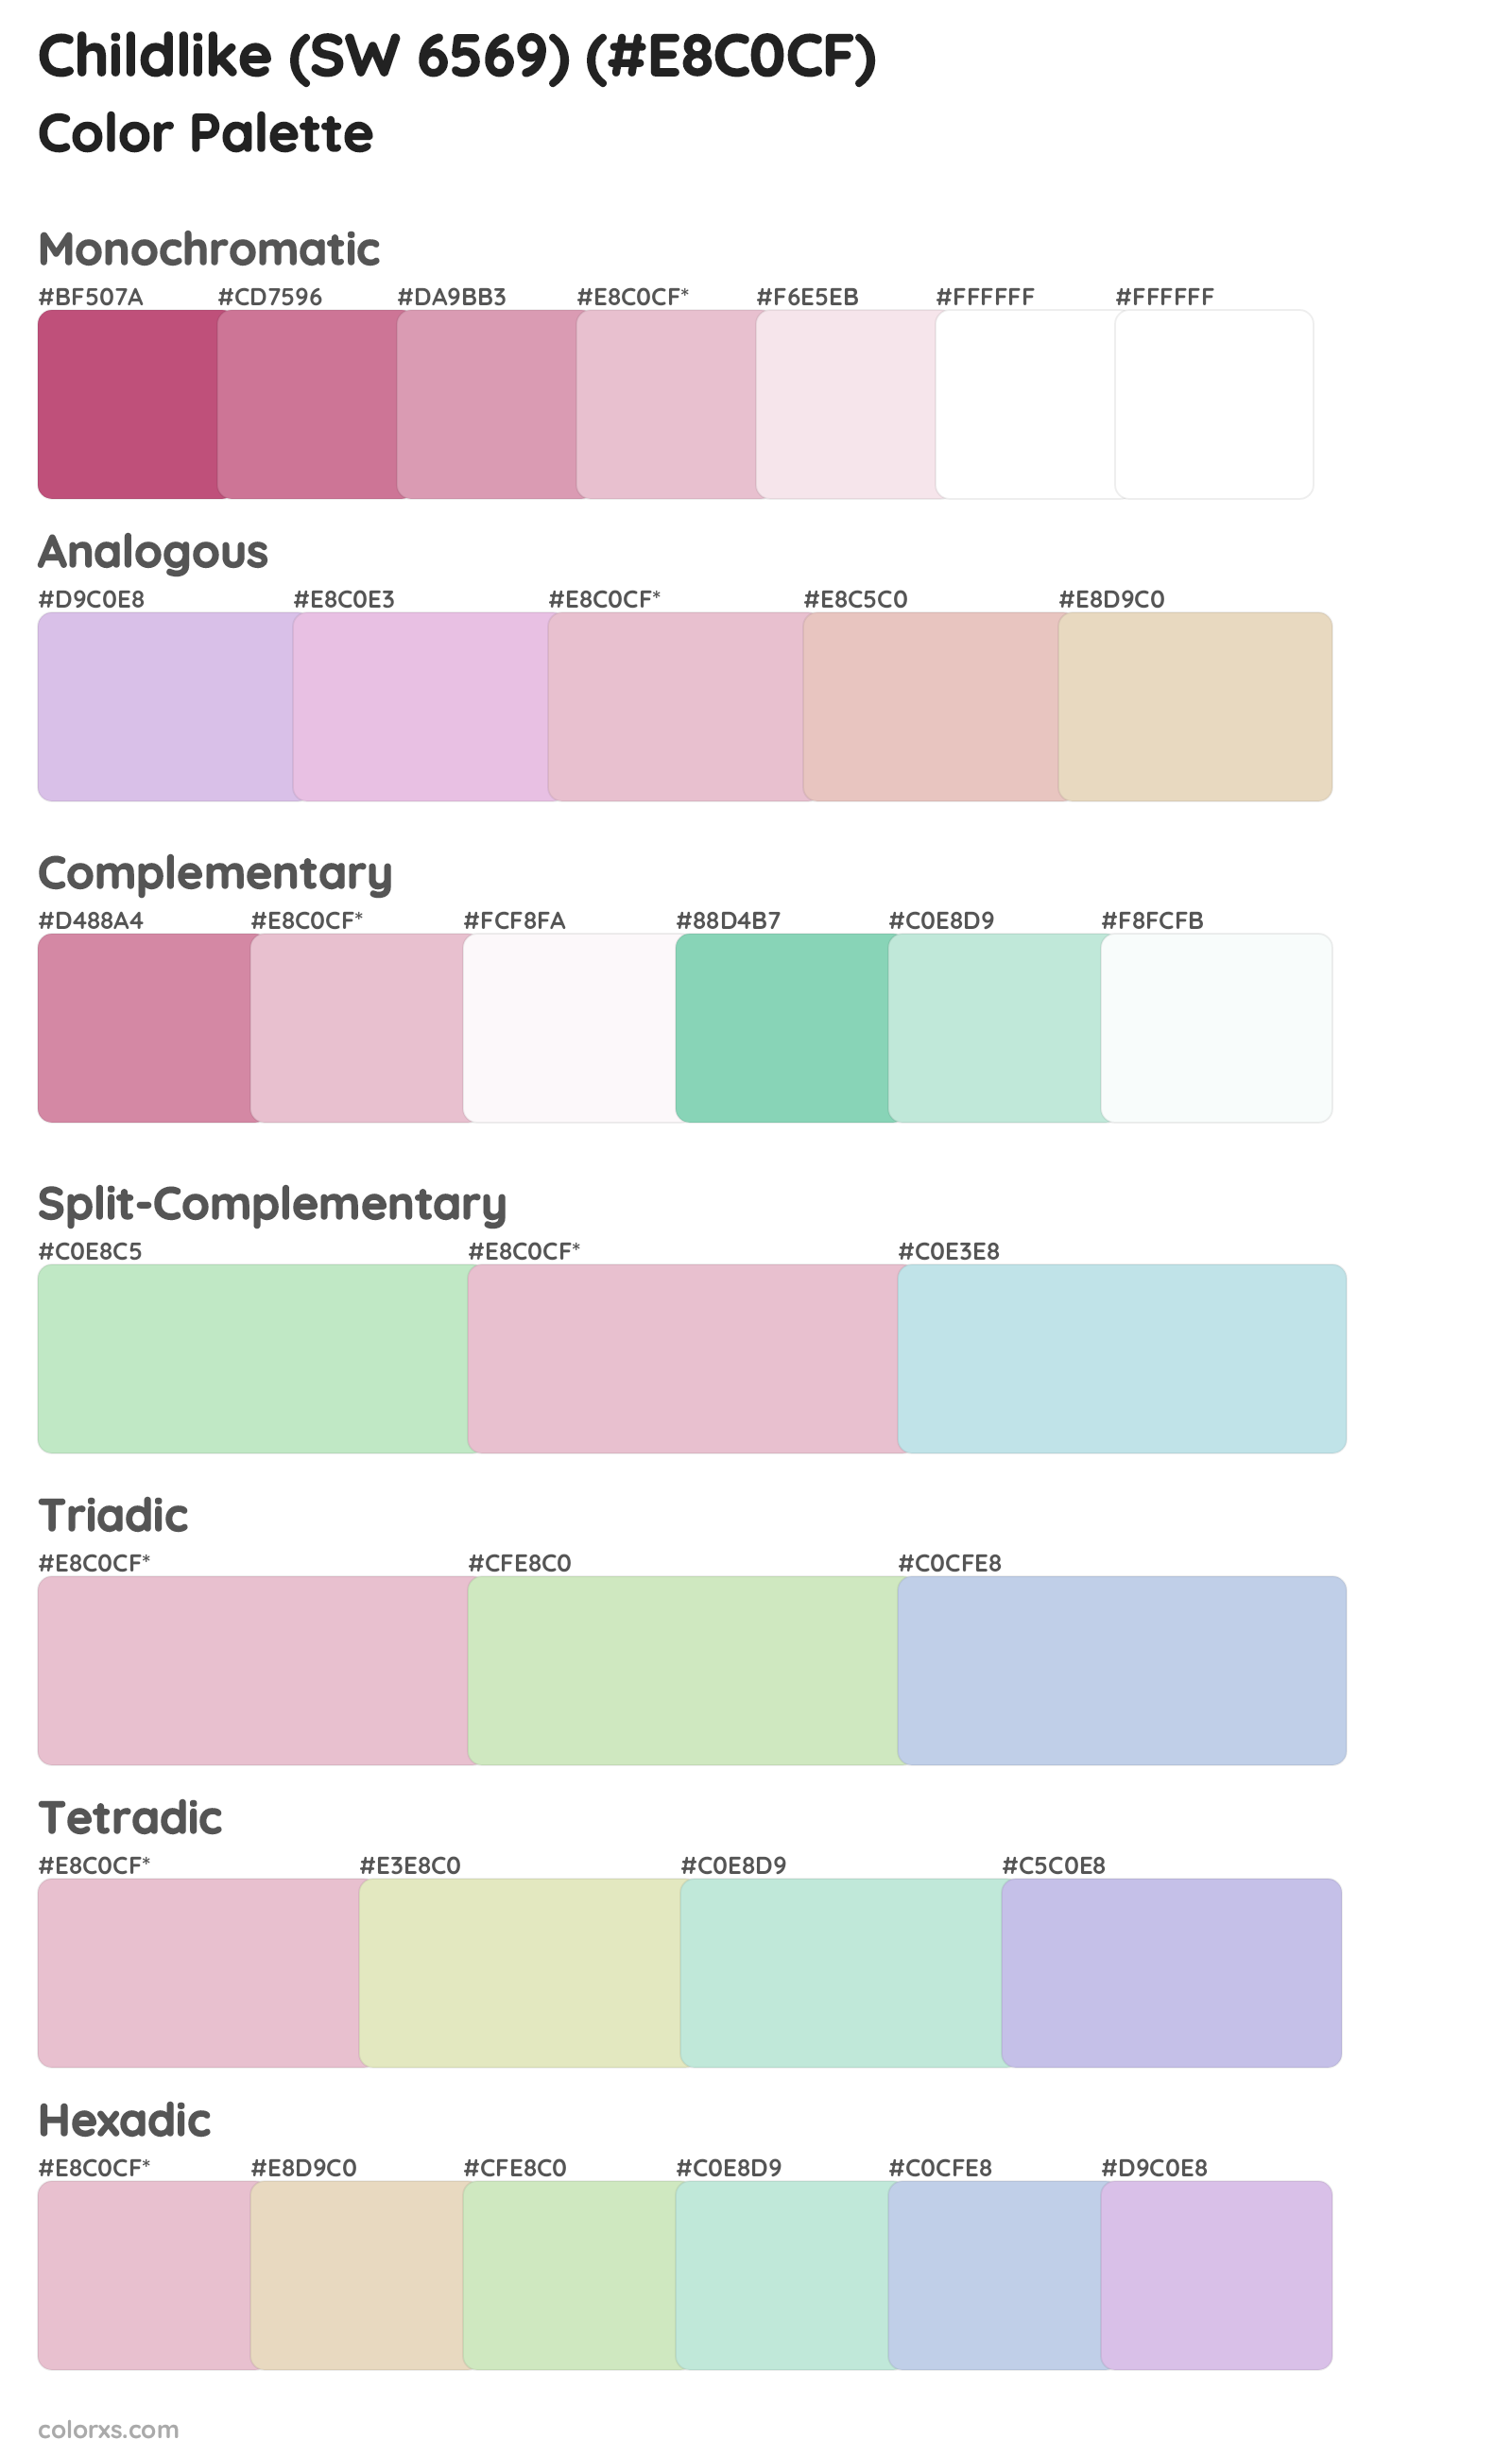 Childlike (SW 6569) Color Scheme Palettes